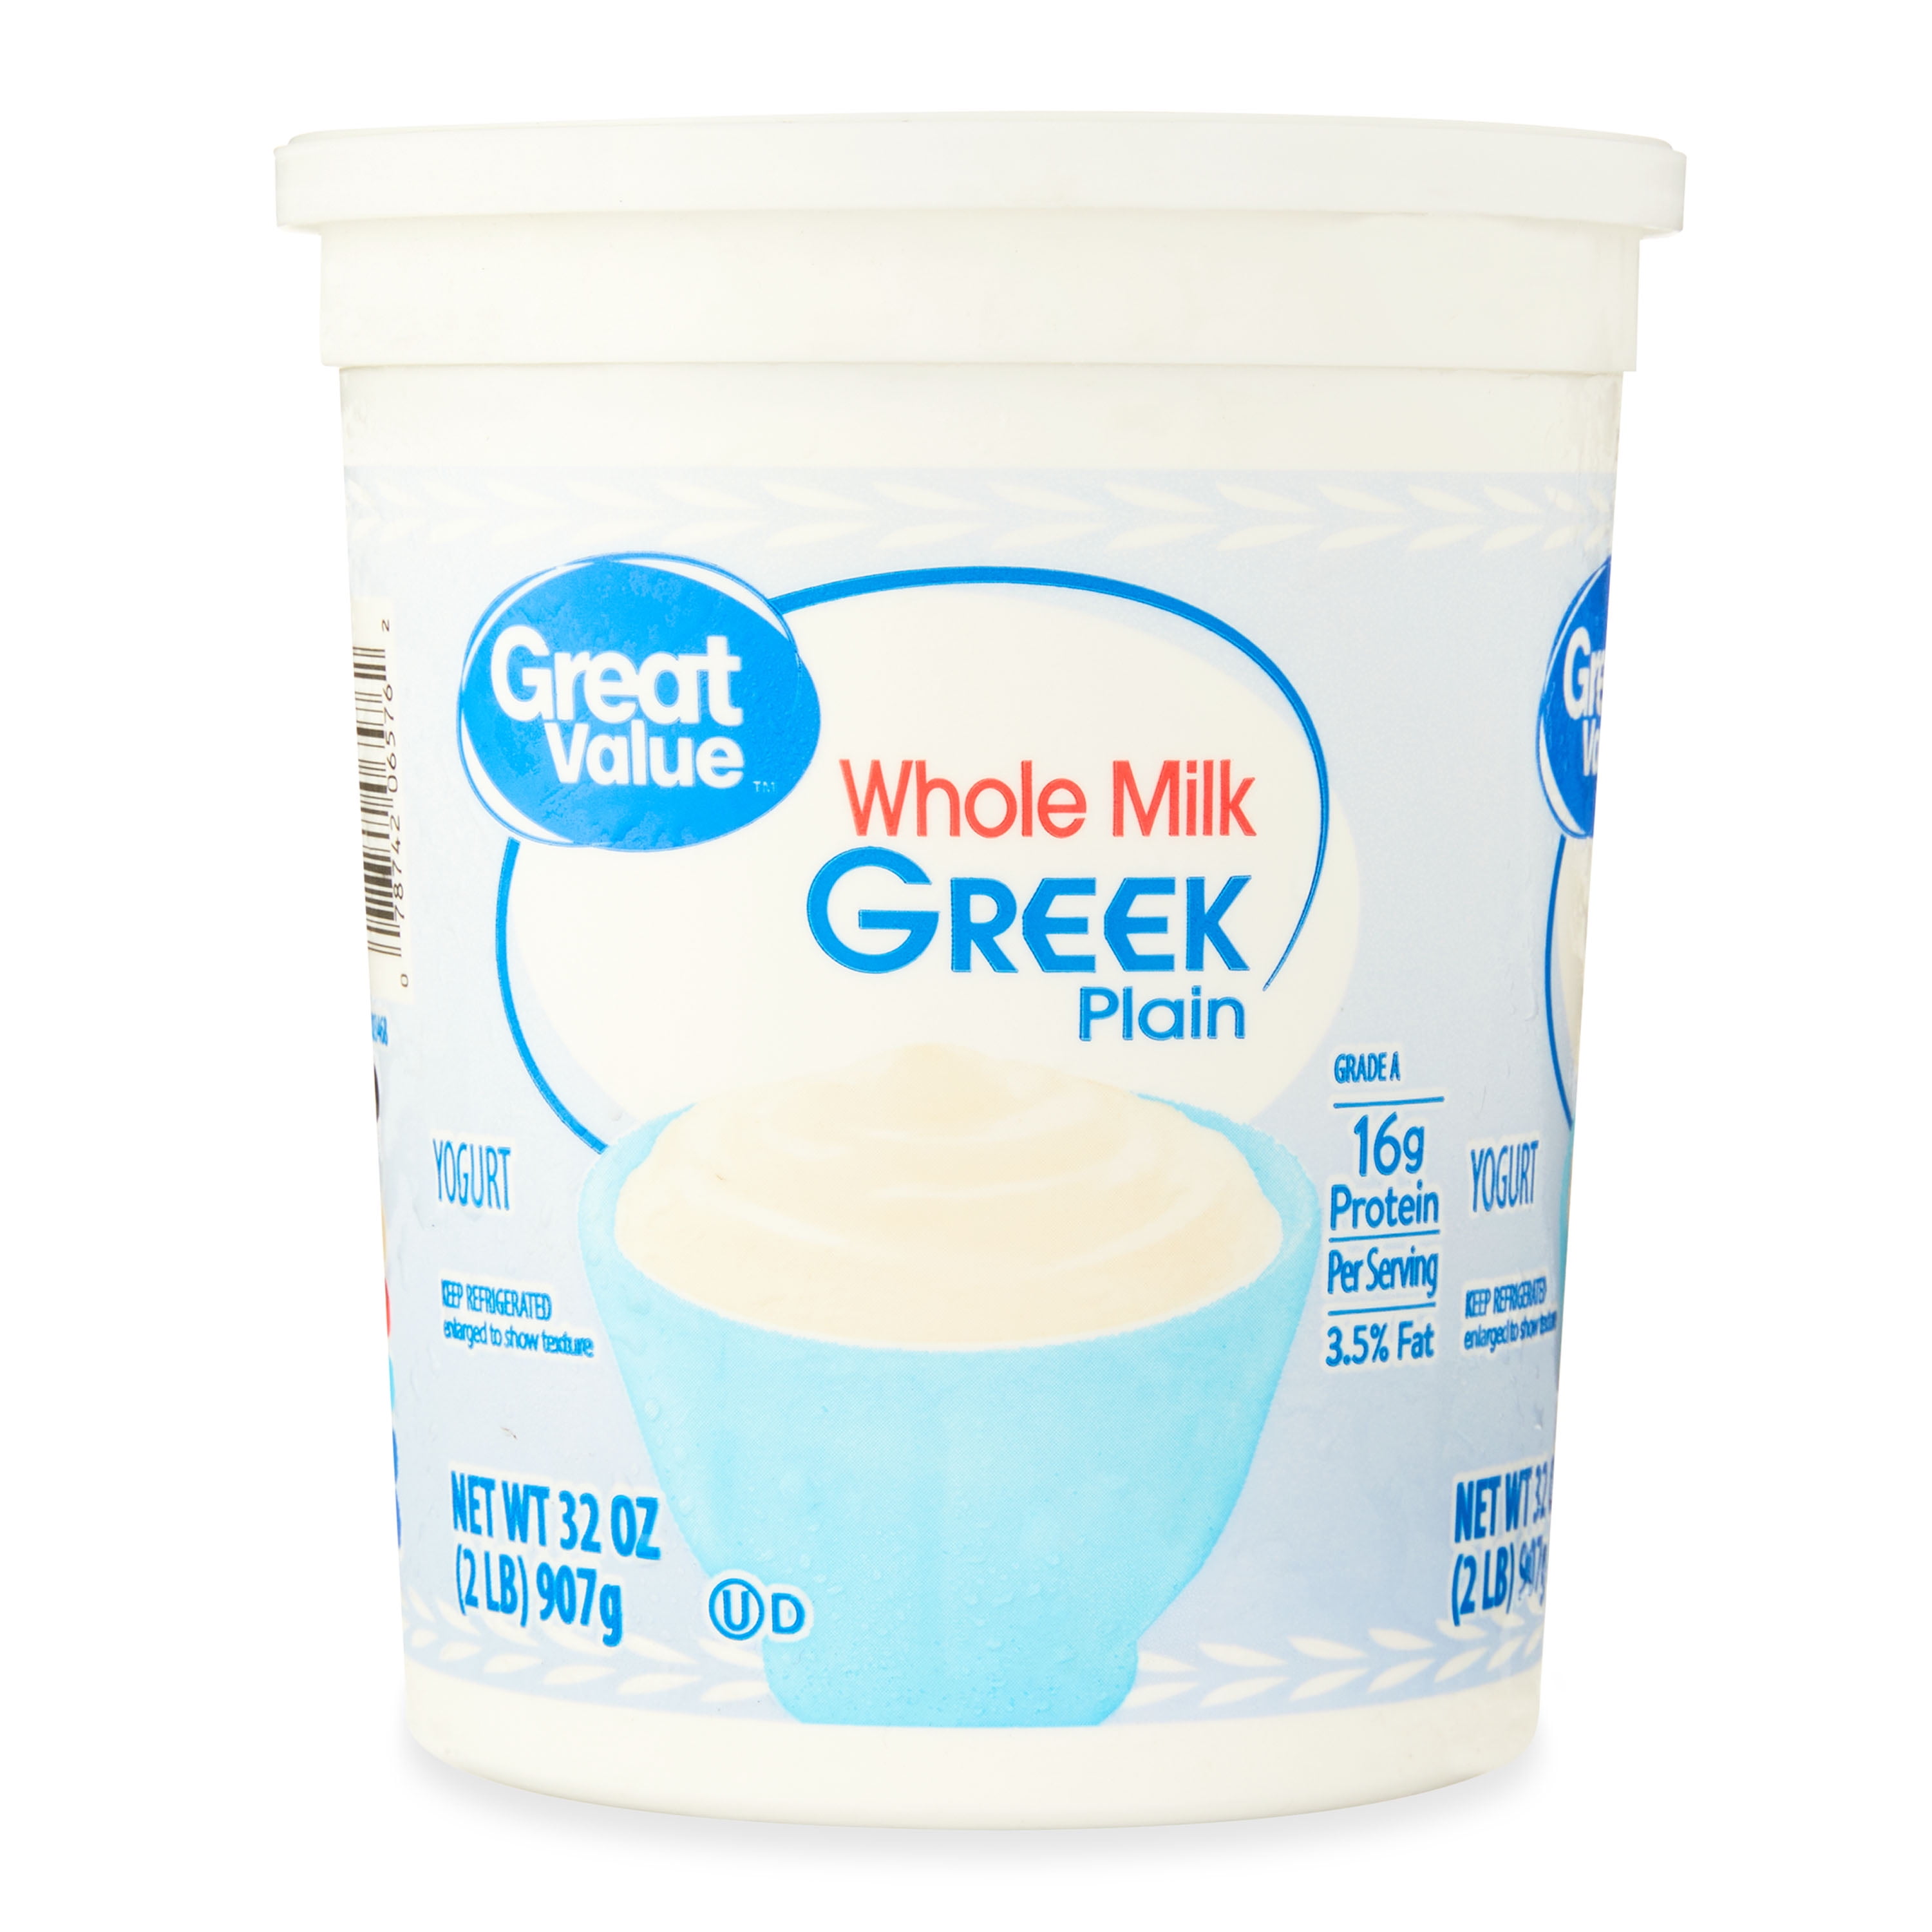 Great Value (Walmart) Plain Whole Milk Greek Yogurt Yogurt Review